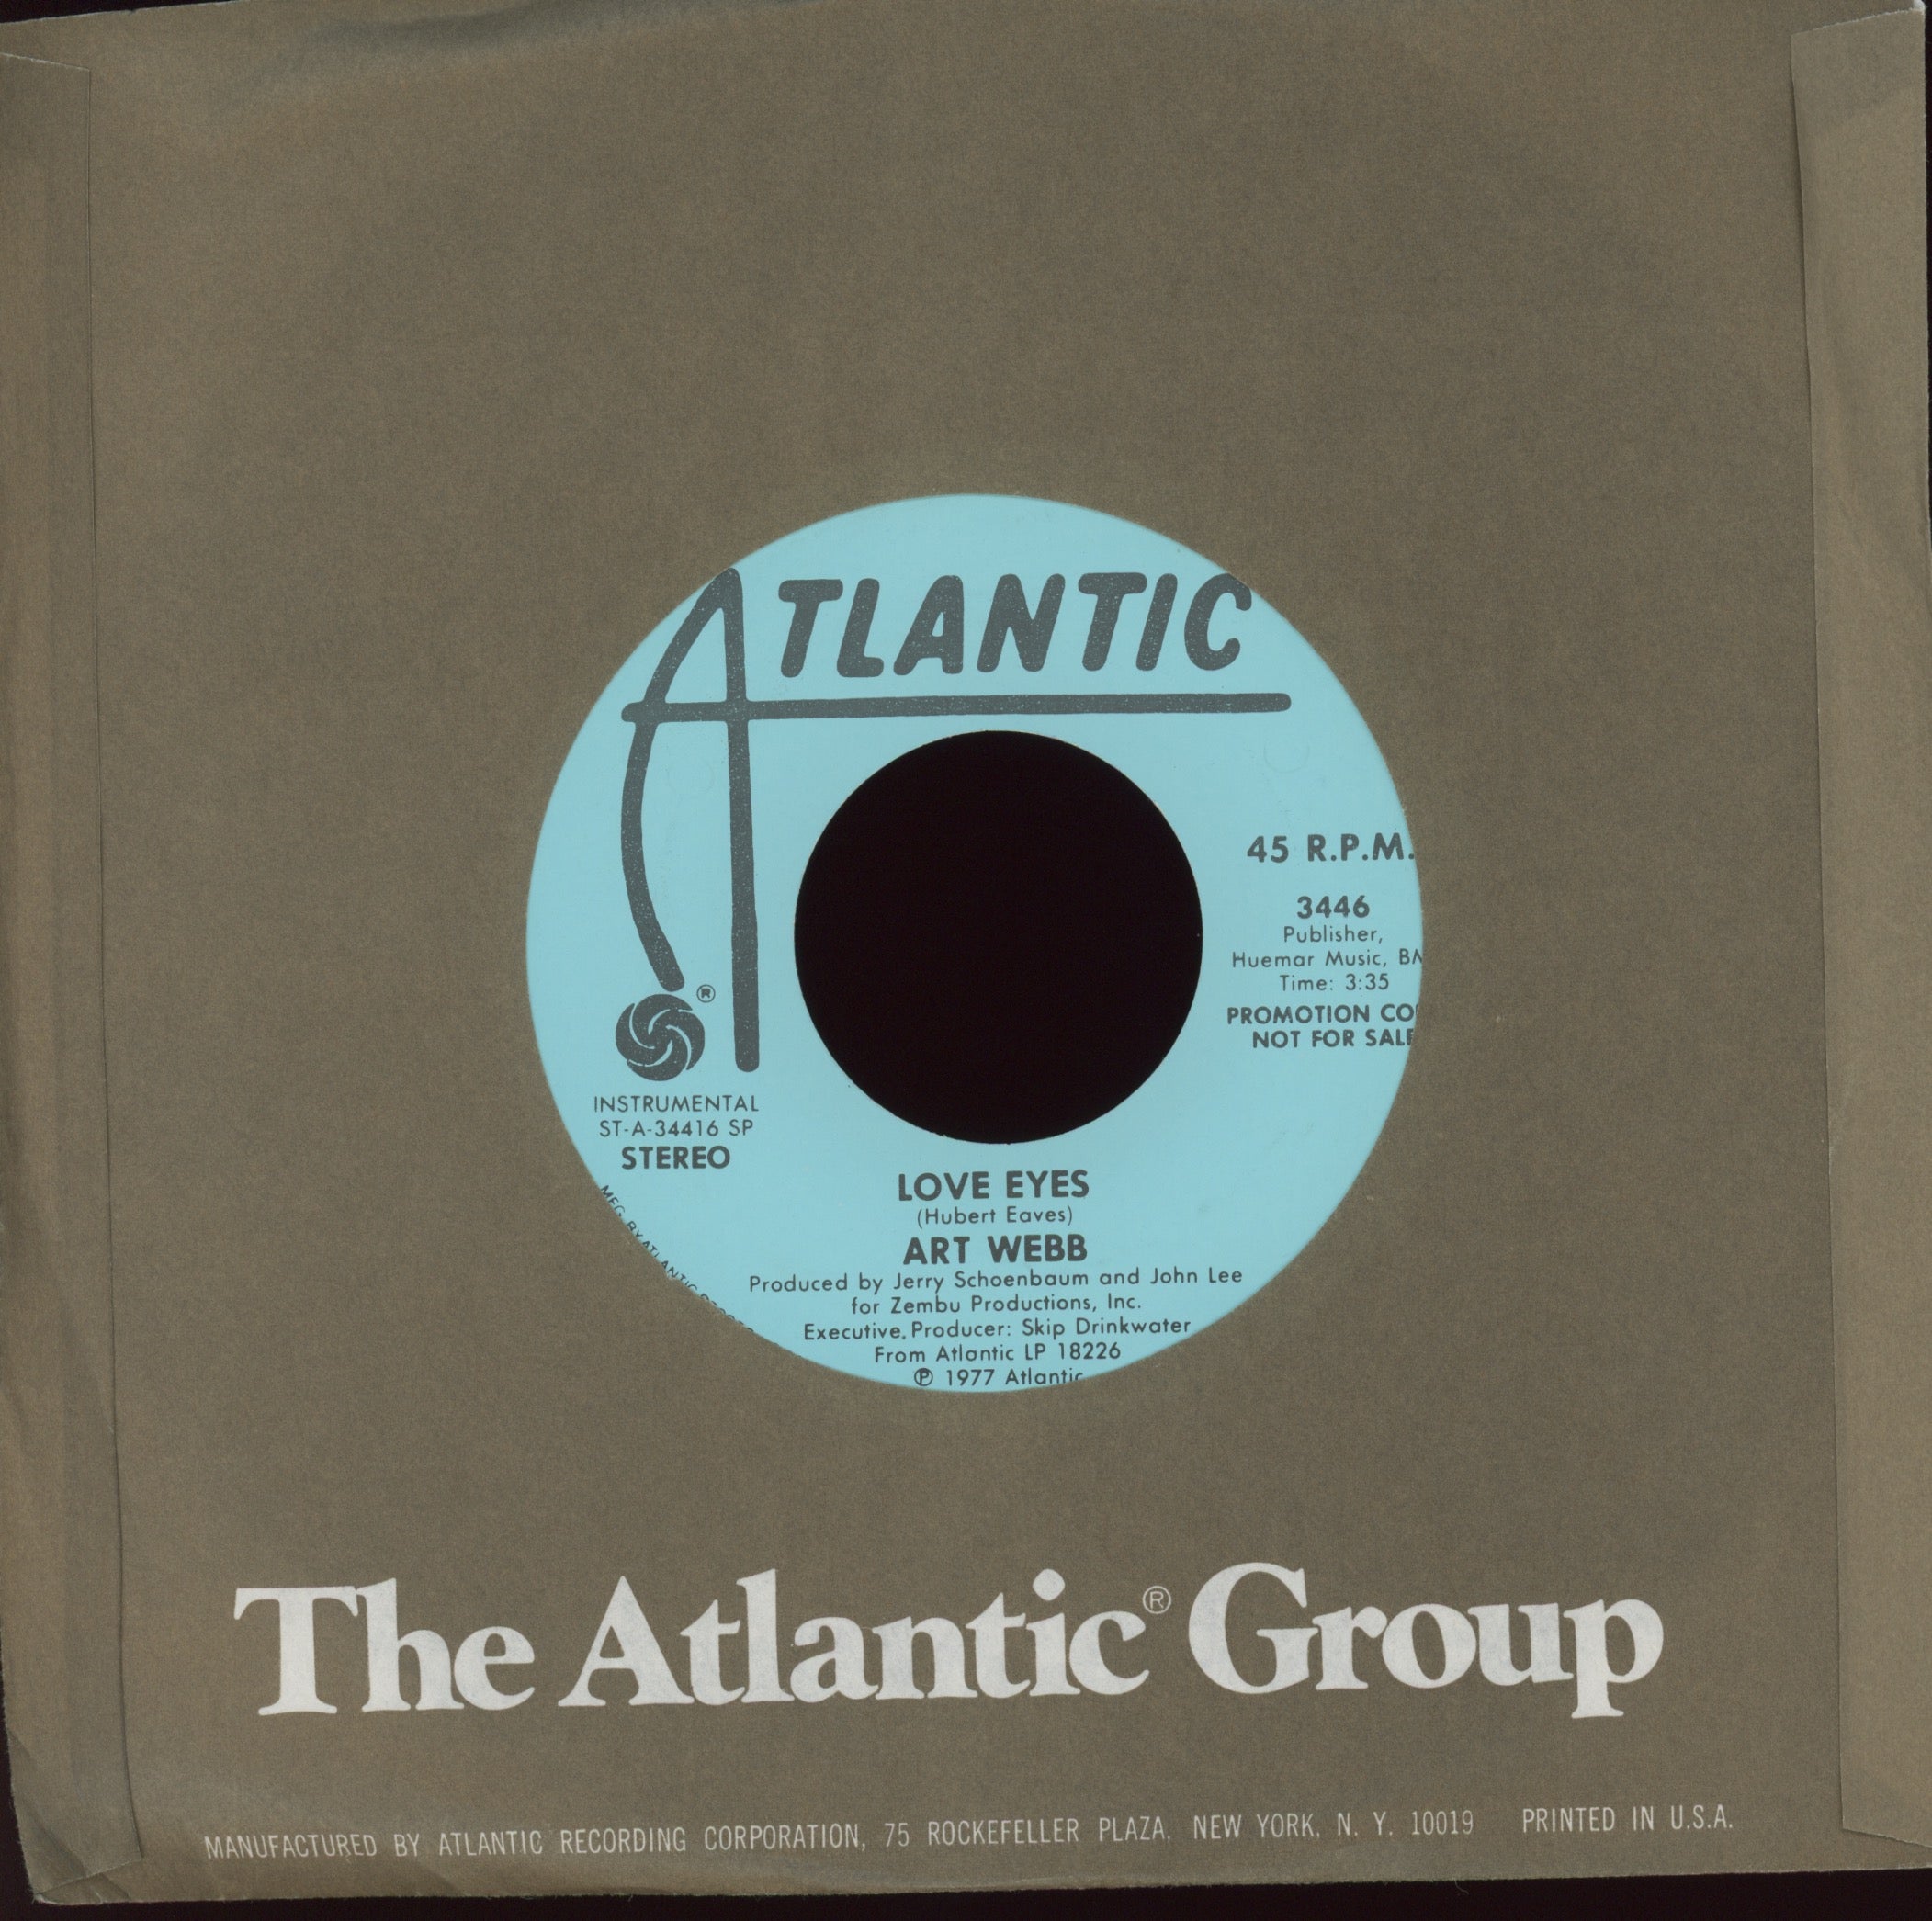 Art Webb - You Can't Hide Love on Atlantic Promo